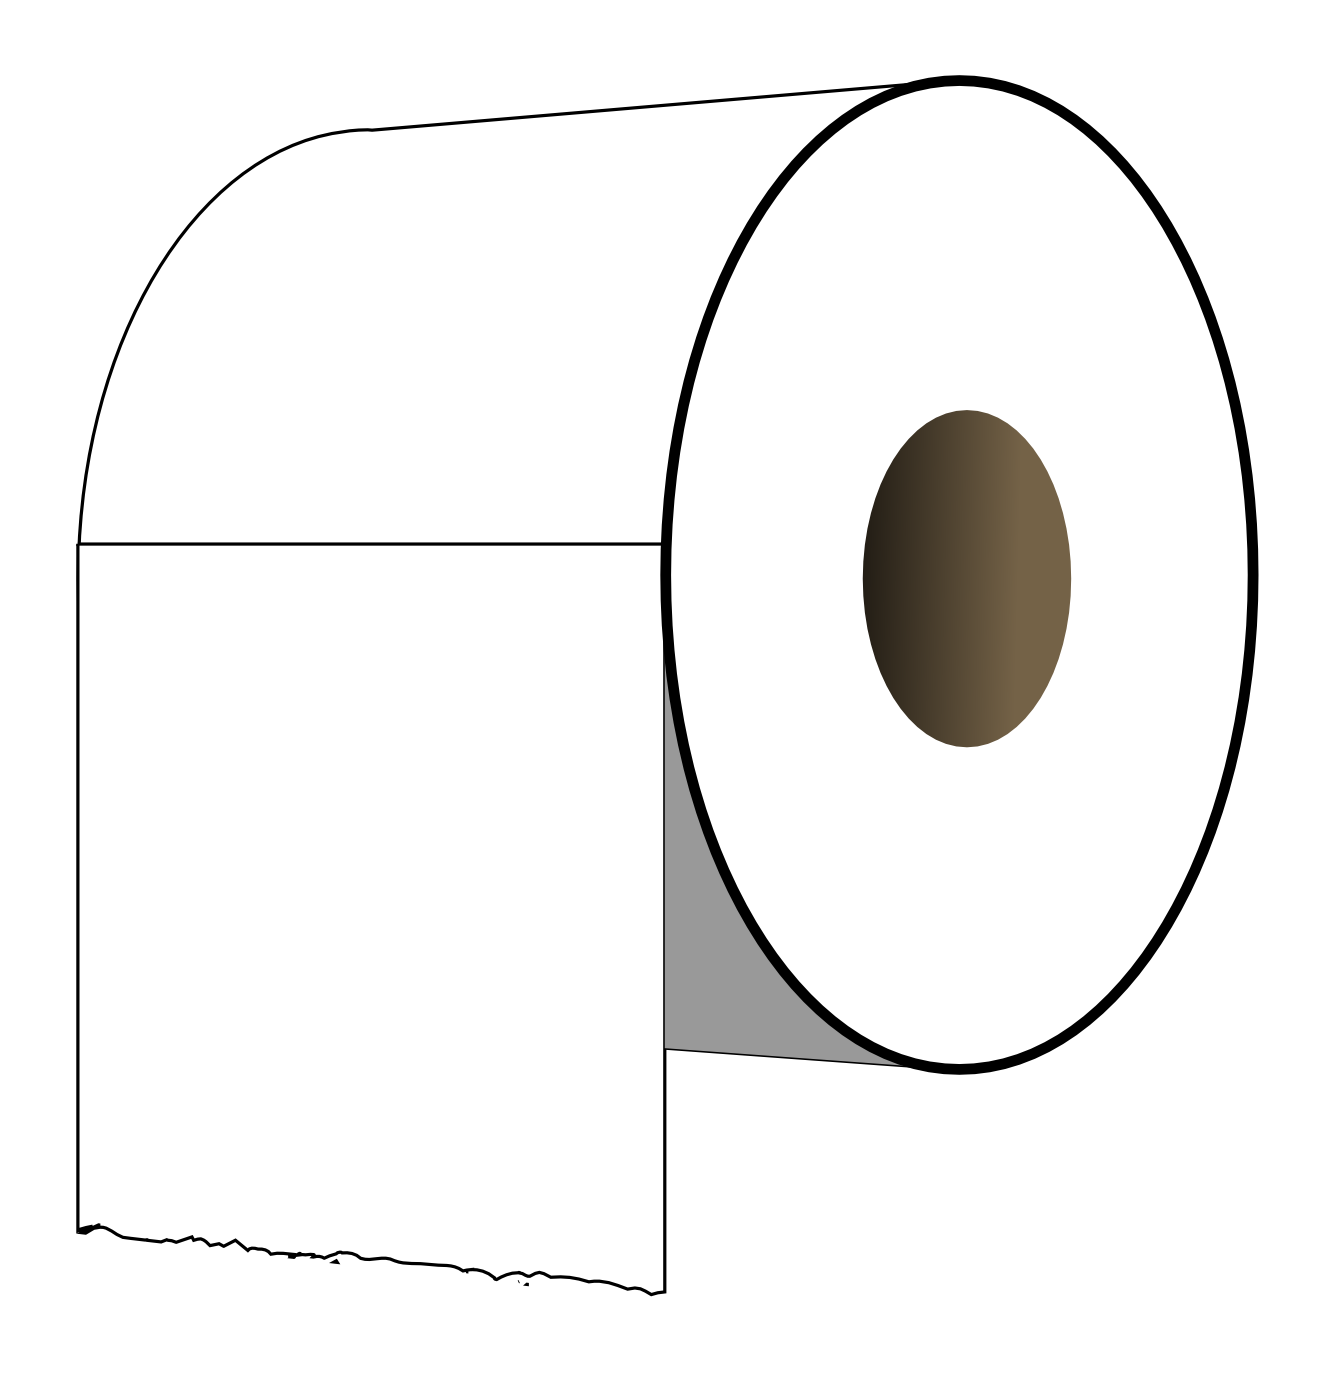 Toilet paper roll clip art - ClipartFox